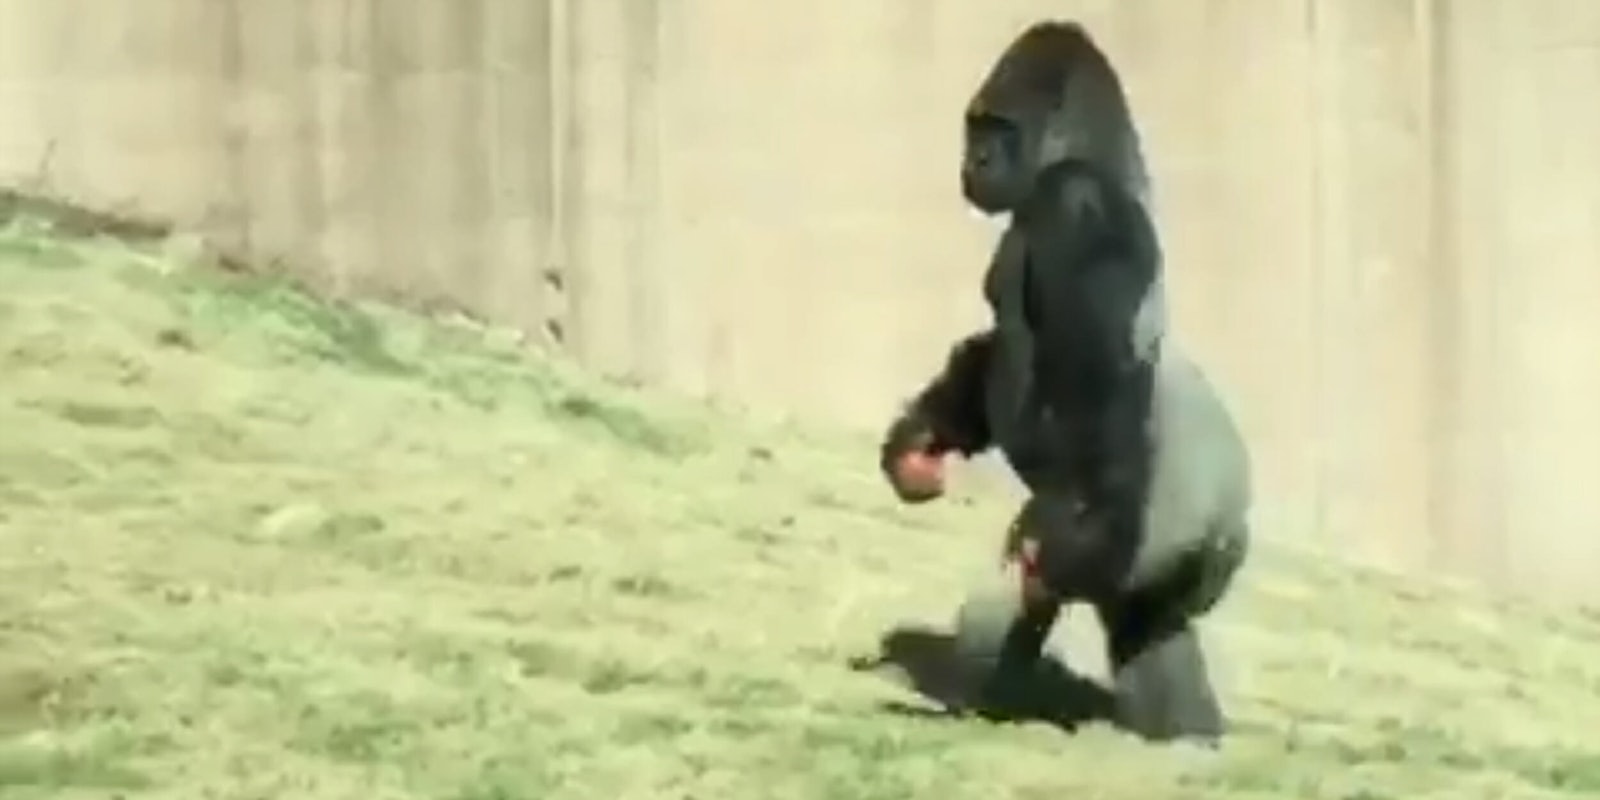 Louis, the bipedal gorilla